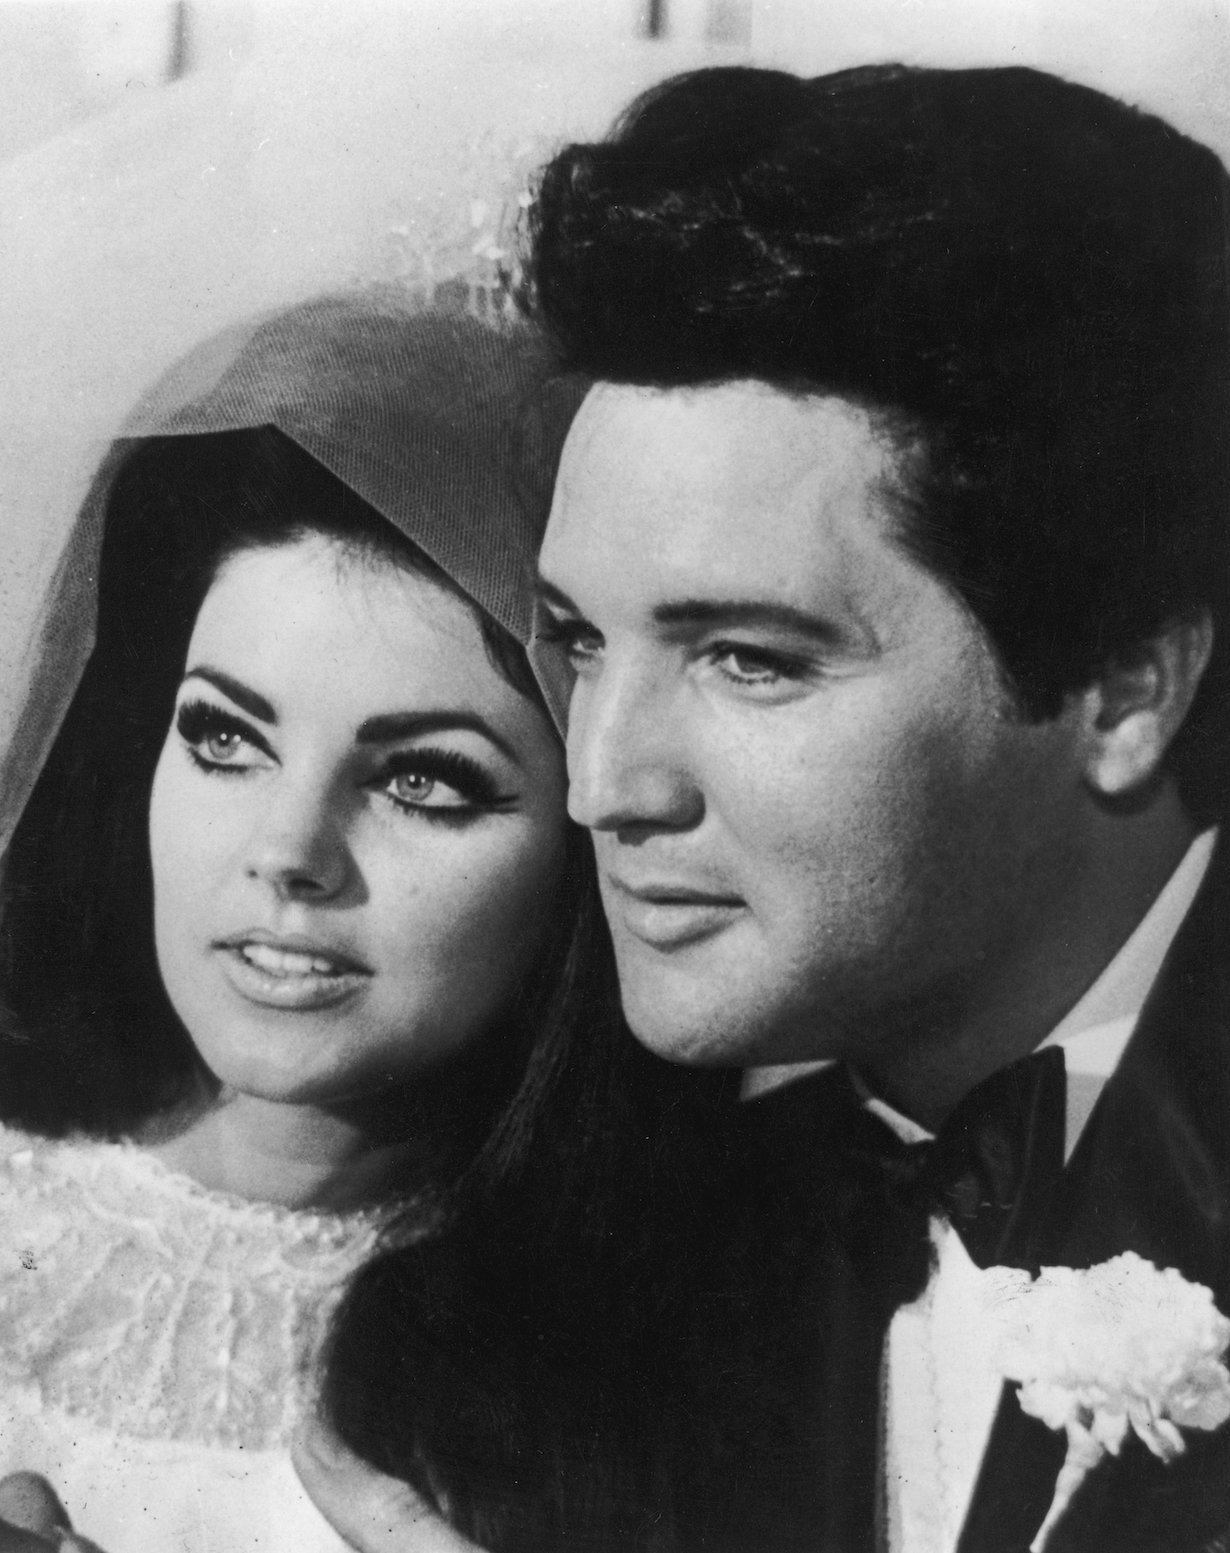 American rock n' roll singer and actor Elvis Presley with his bride Priscilla Beaulieu after their wedding in Las Vegas